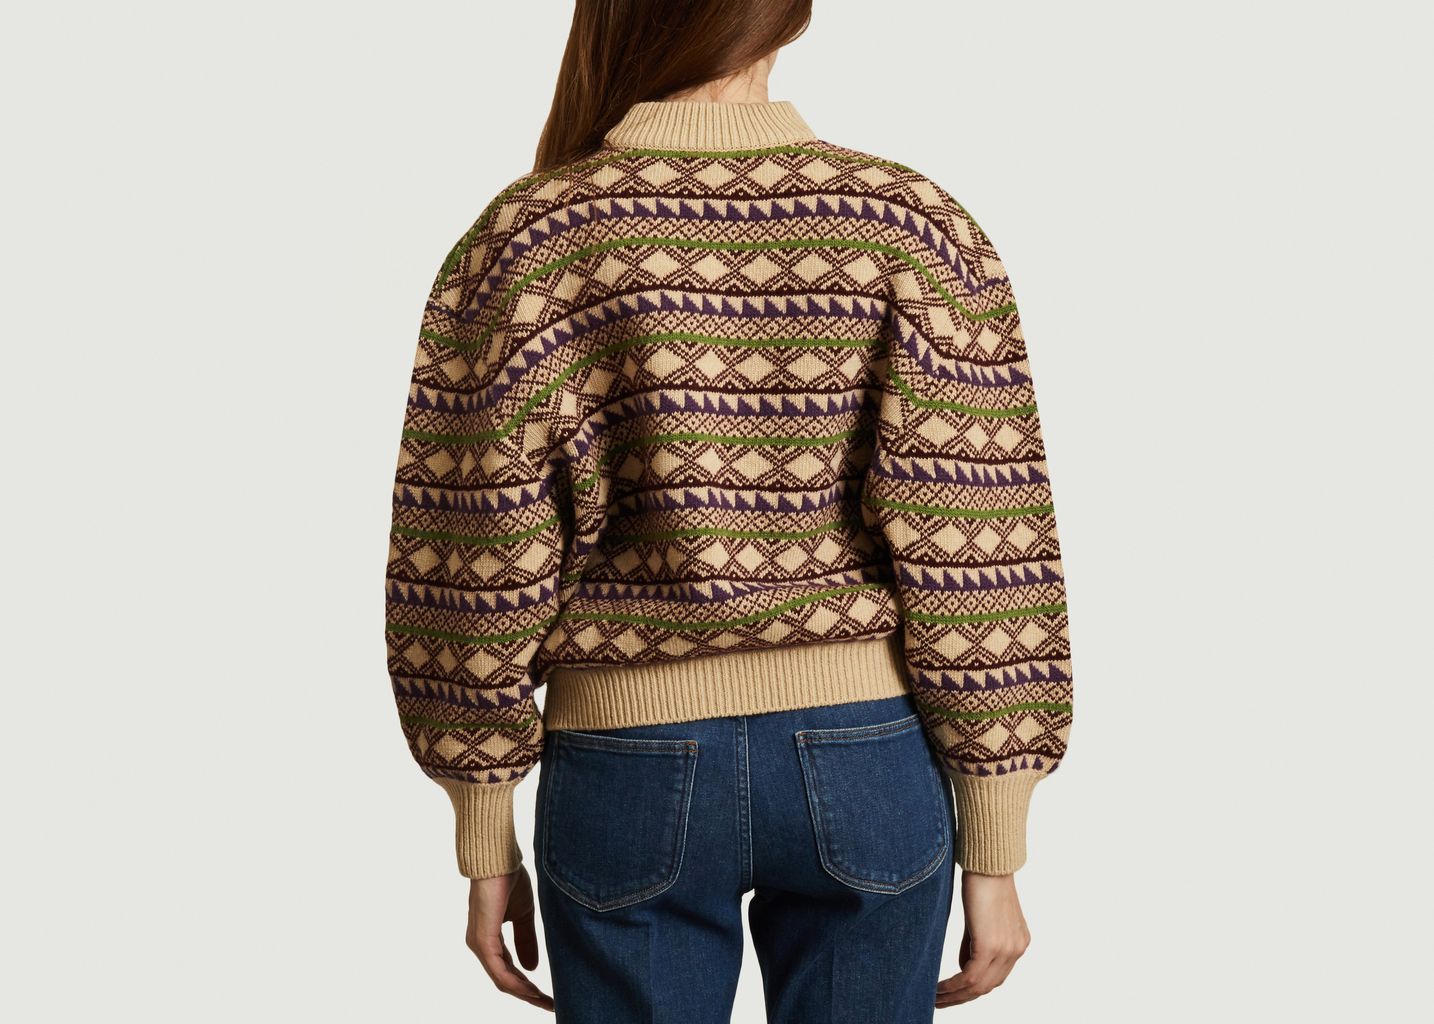 Nebraska crew neck jacquard sweater - Soeur